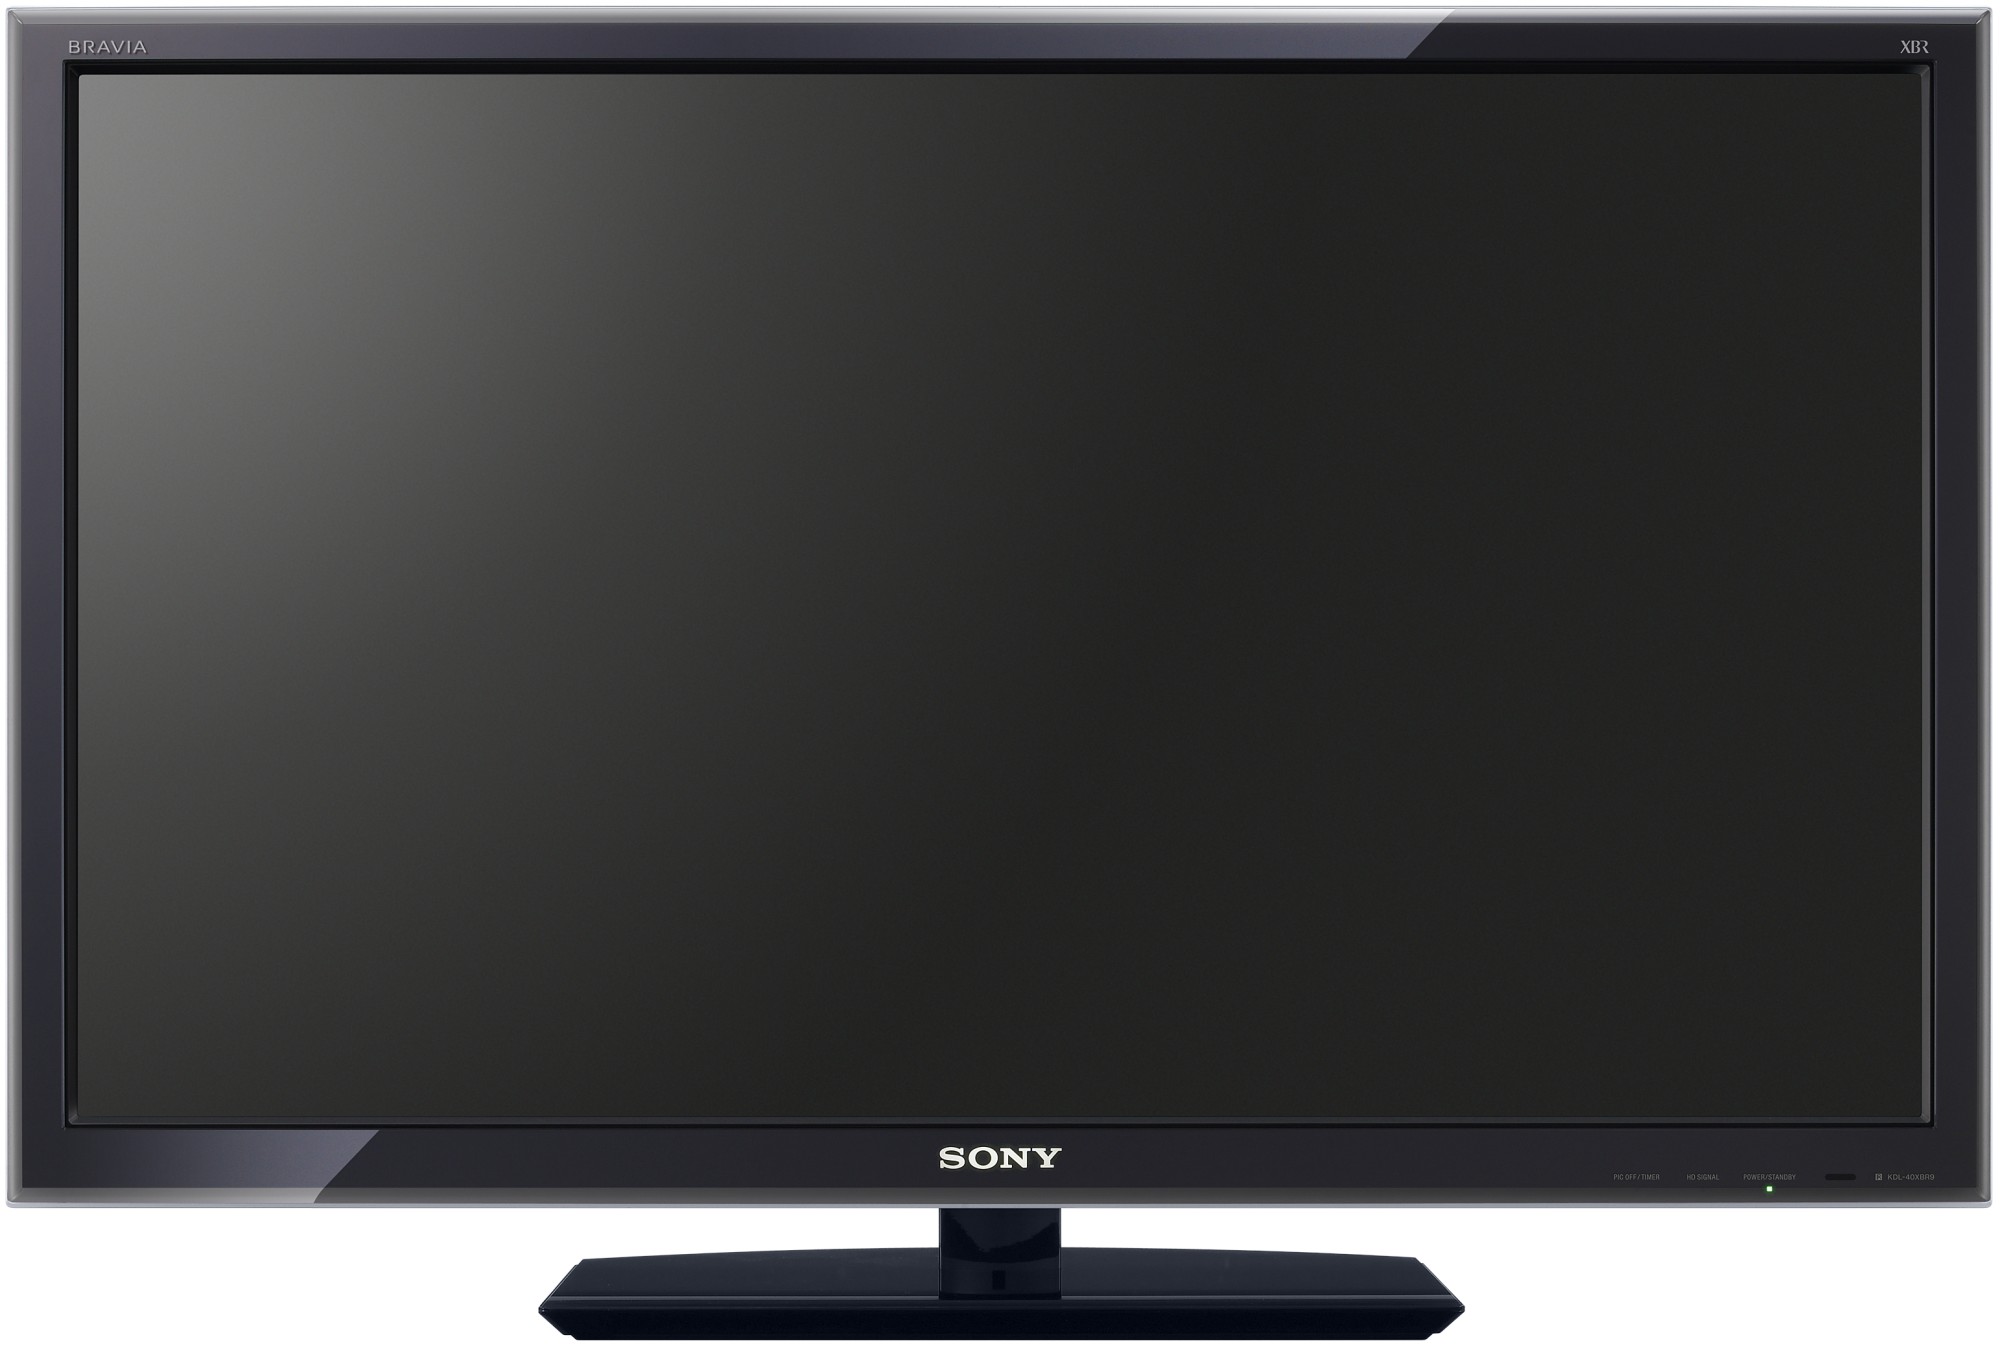 Sony Bravia Kdl-46xbr9 Ota Tv Guide